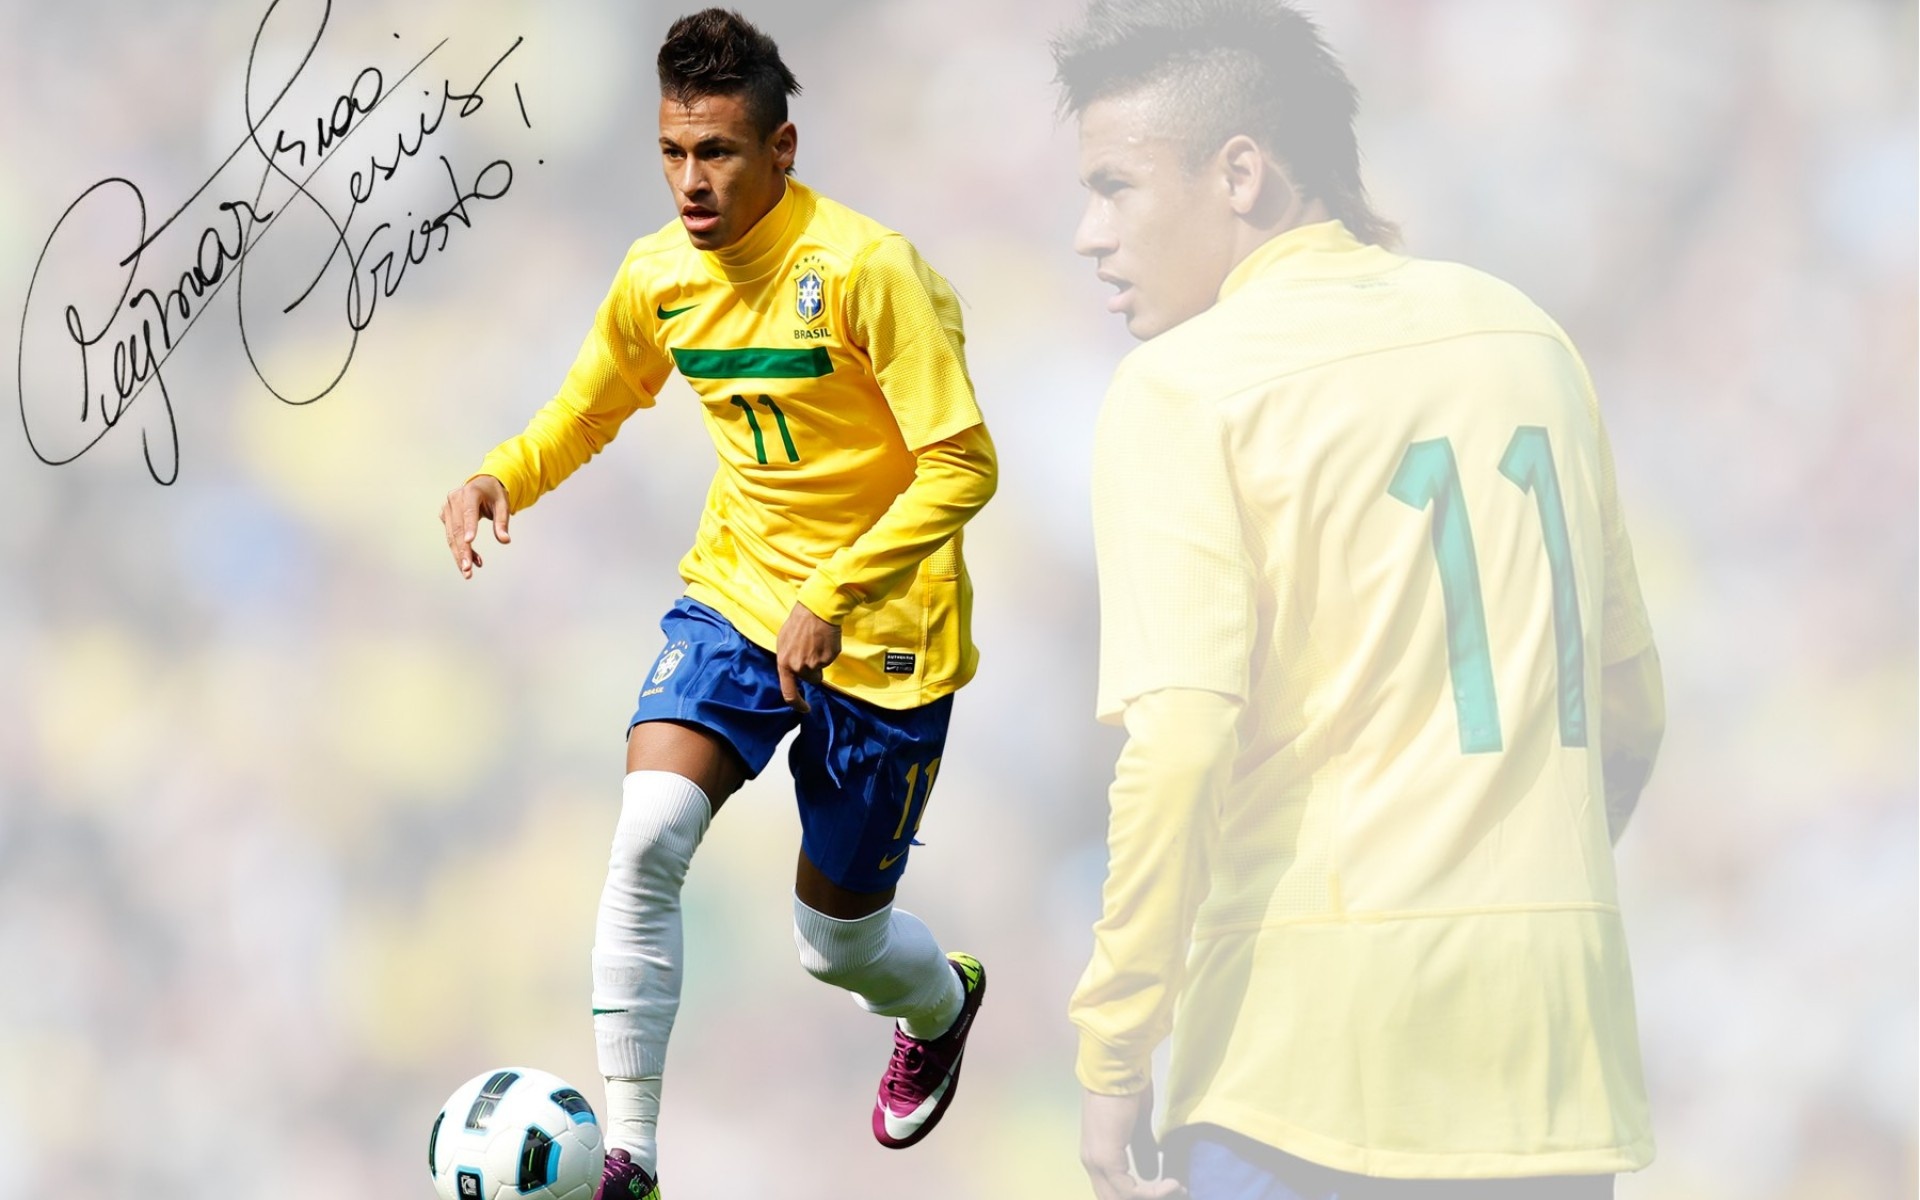 neymar top 10 goals & skills